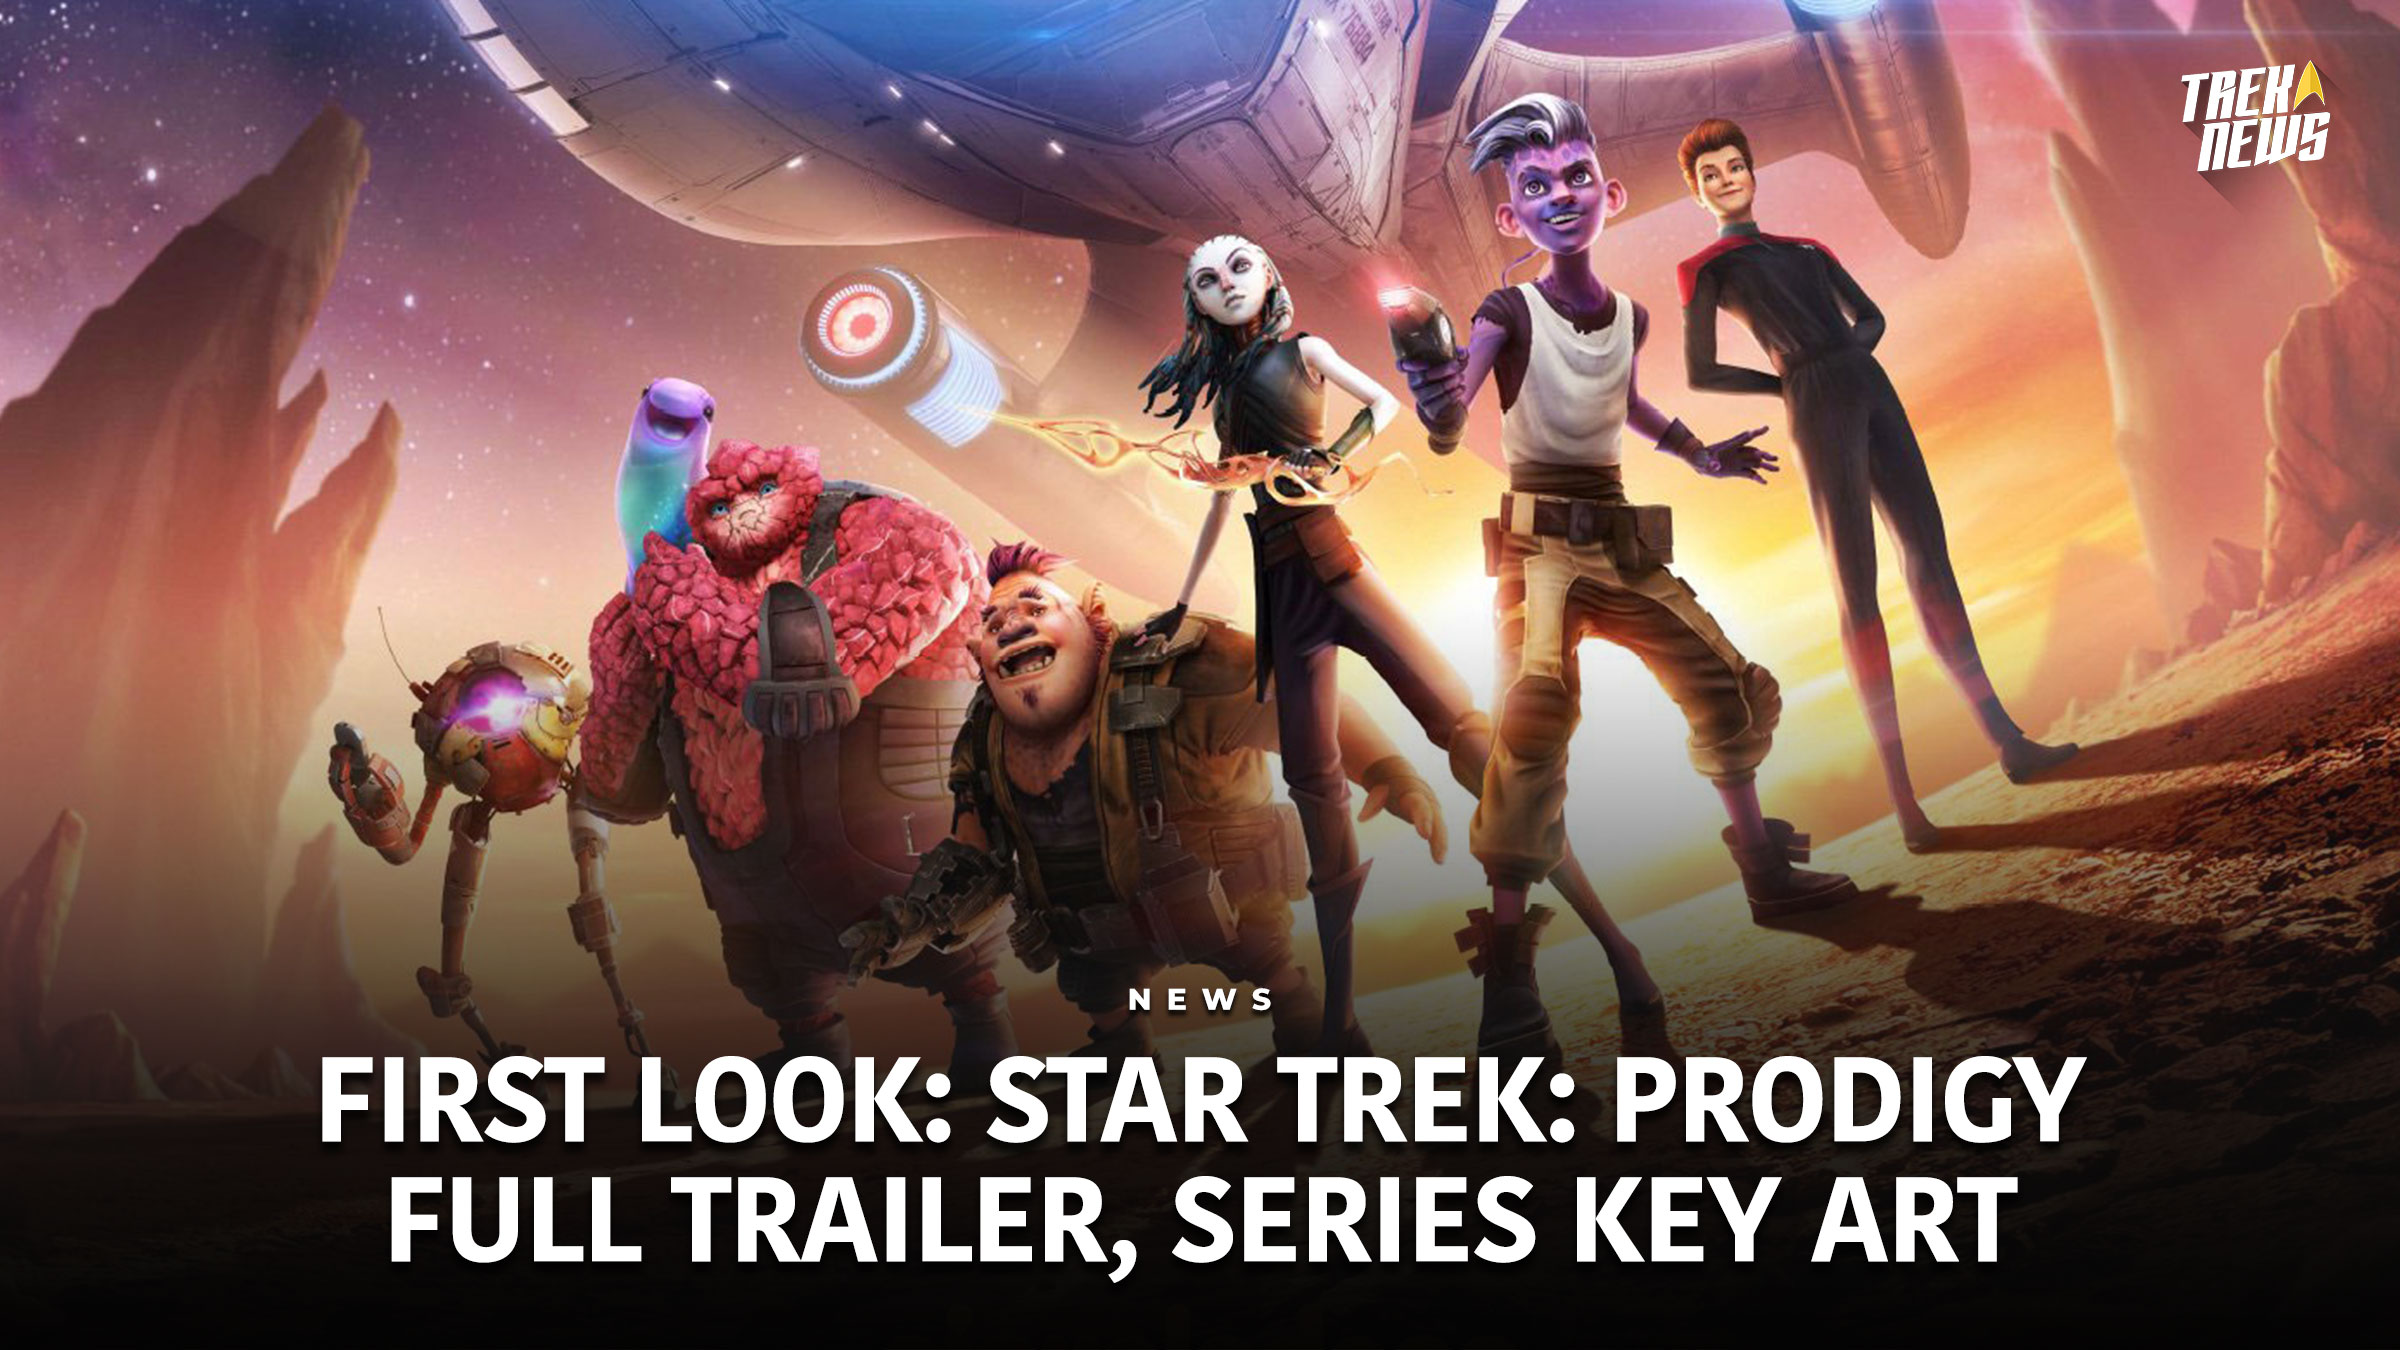 First Look: Star Trek: Prodigy Full Trailer, Series Key Art